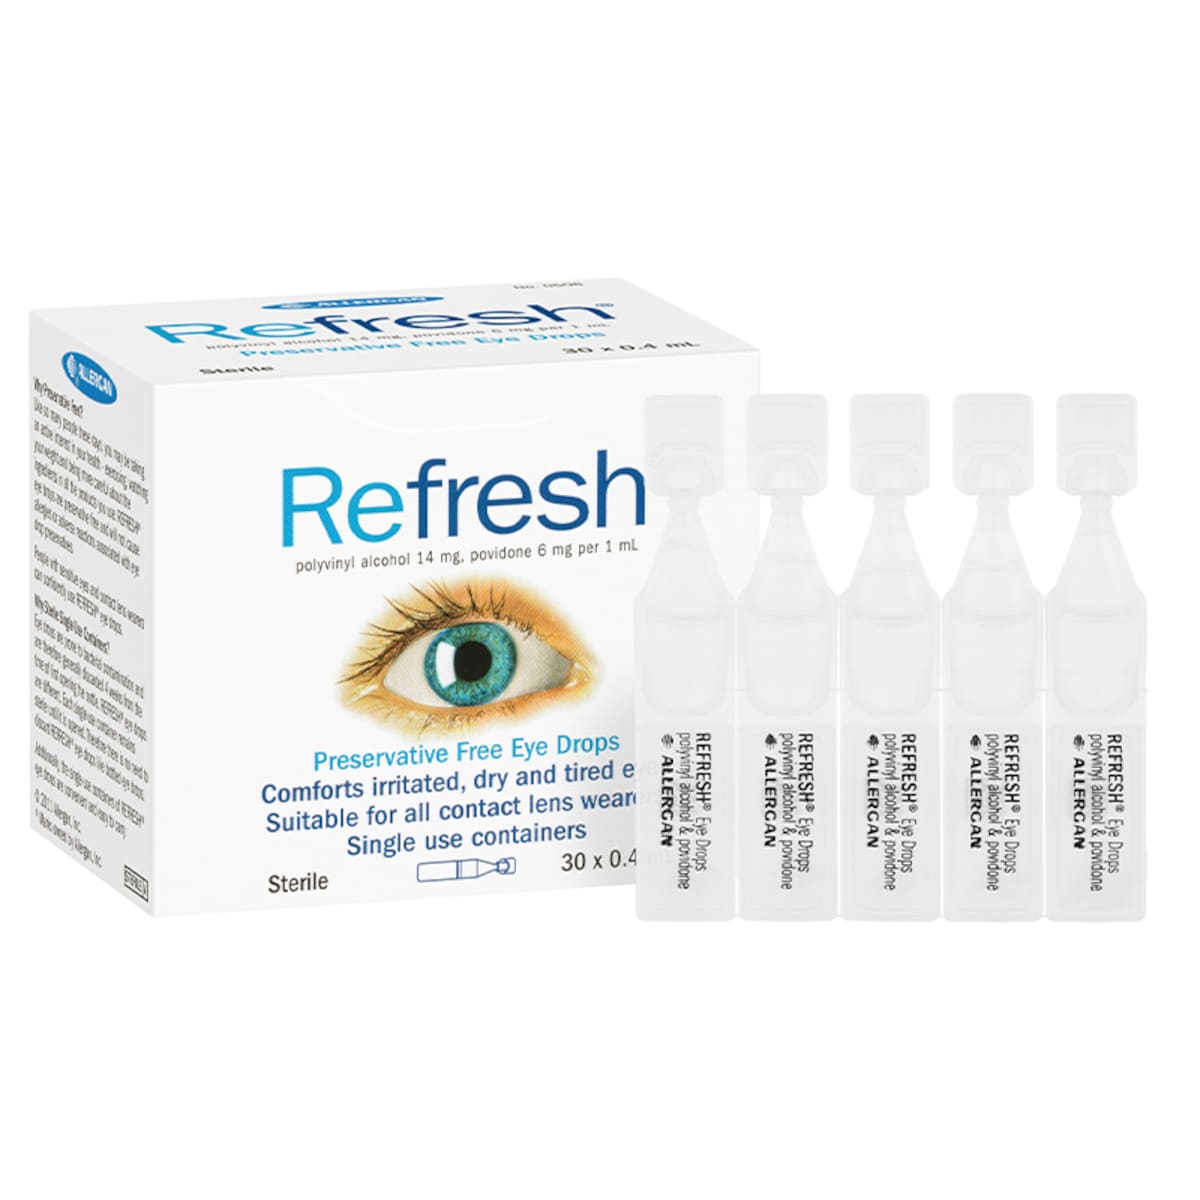 Refresh Preservative Free Eye Drops 0.4ml x 30 Vials